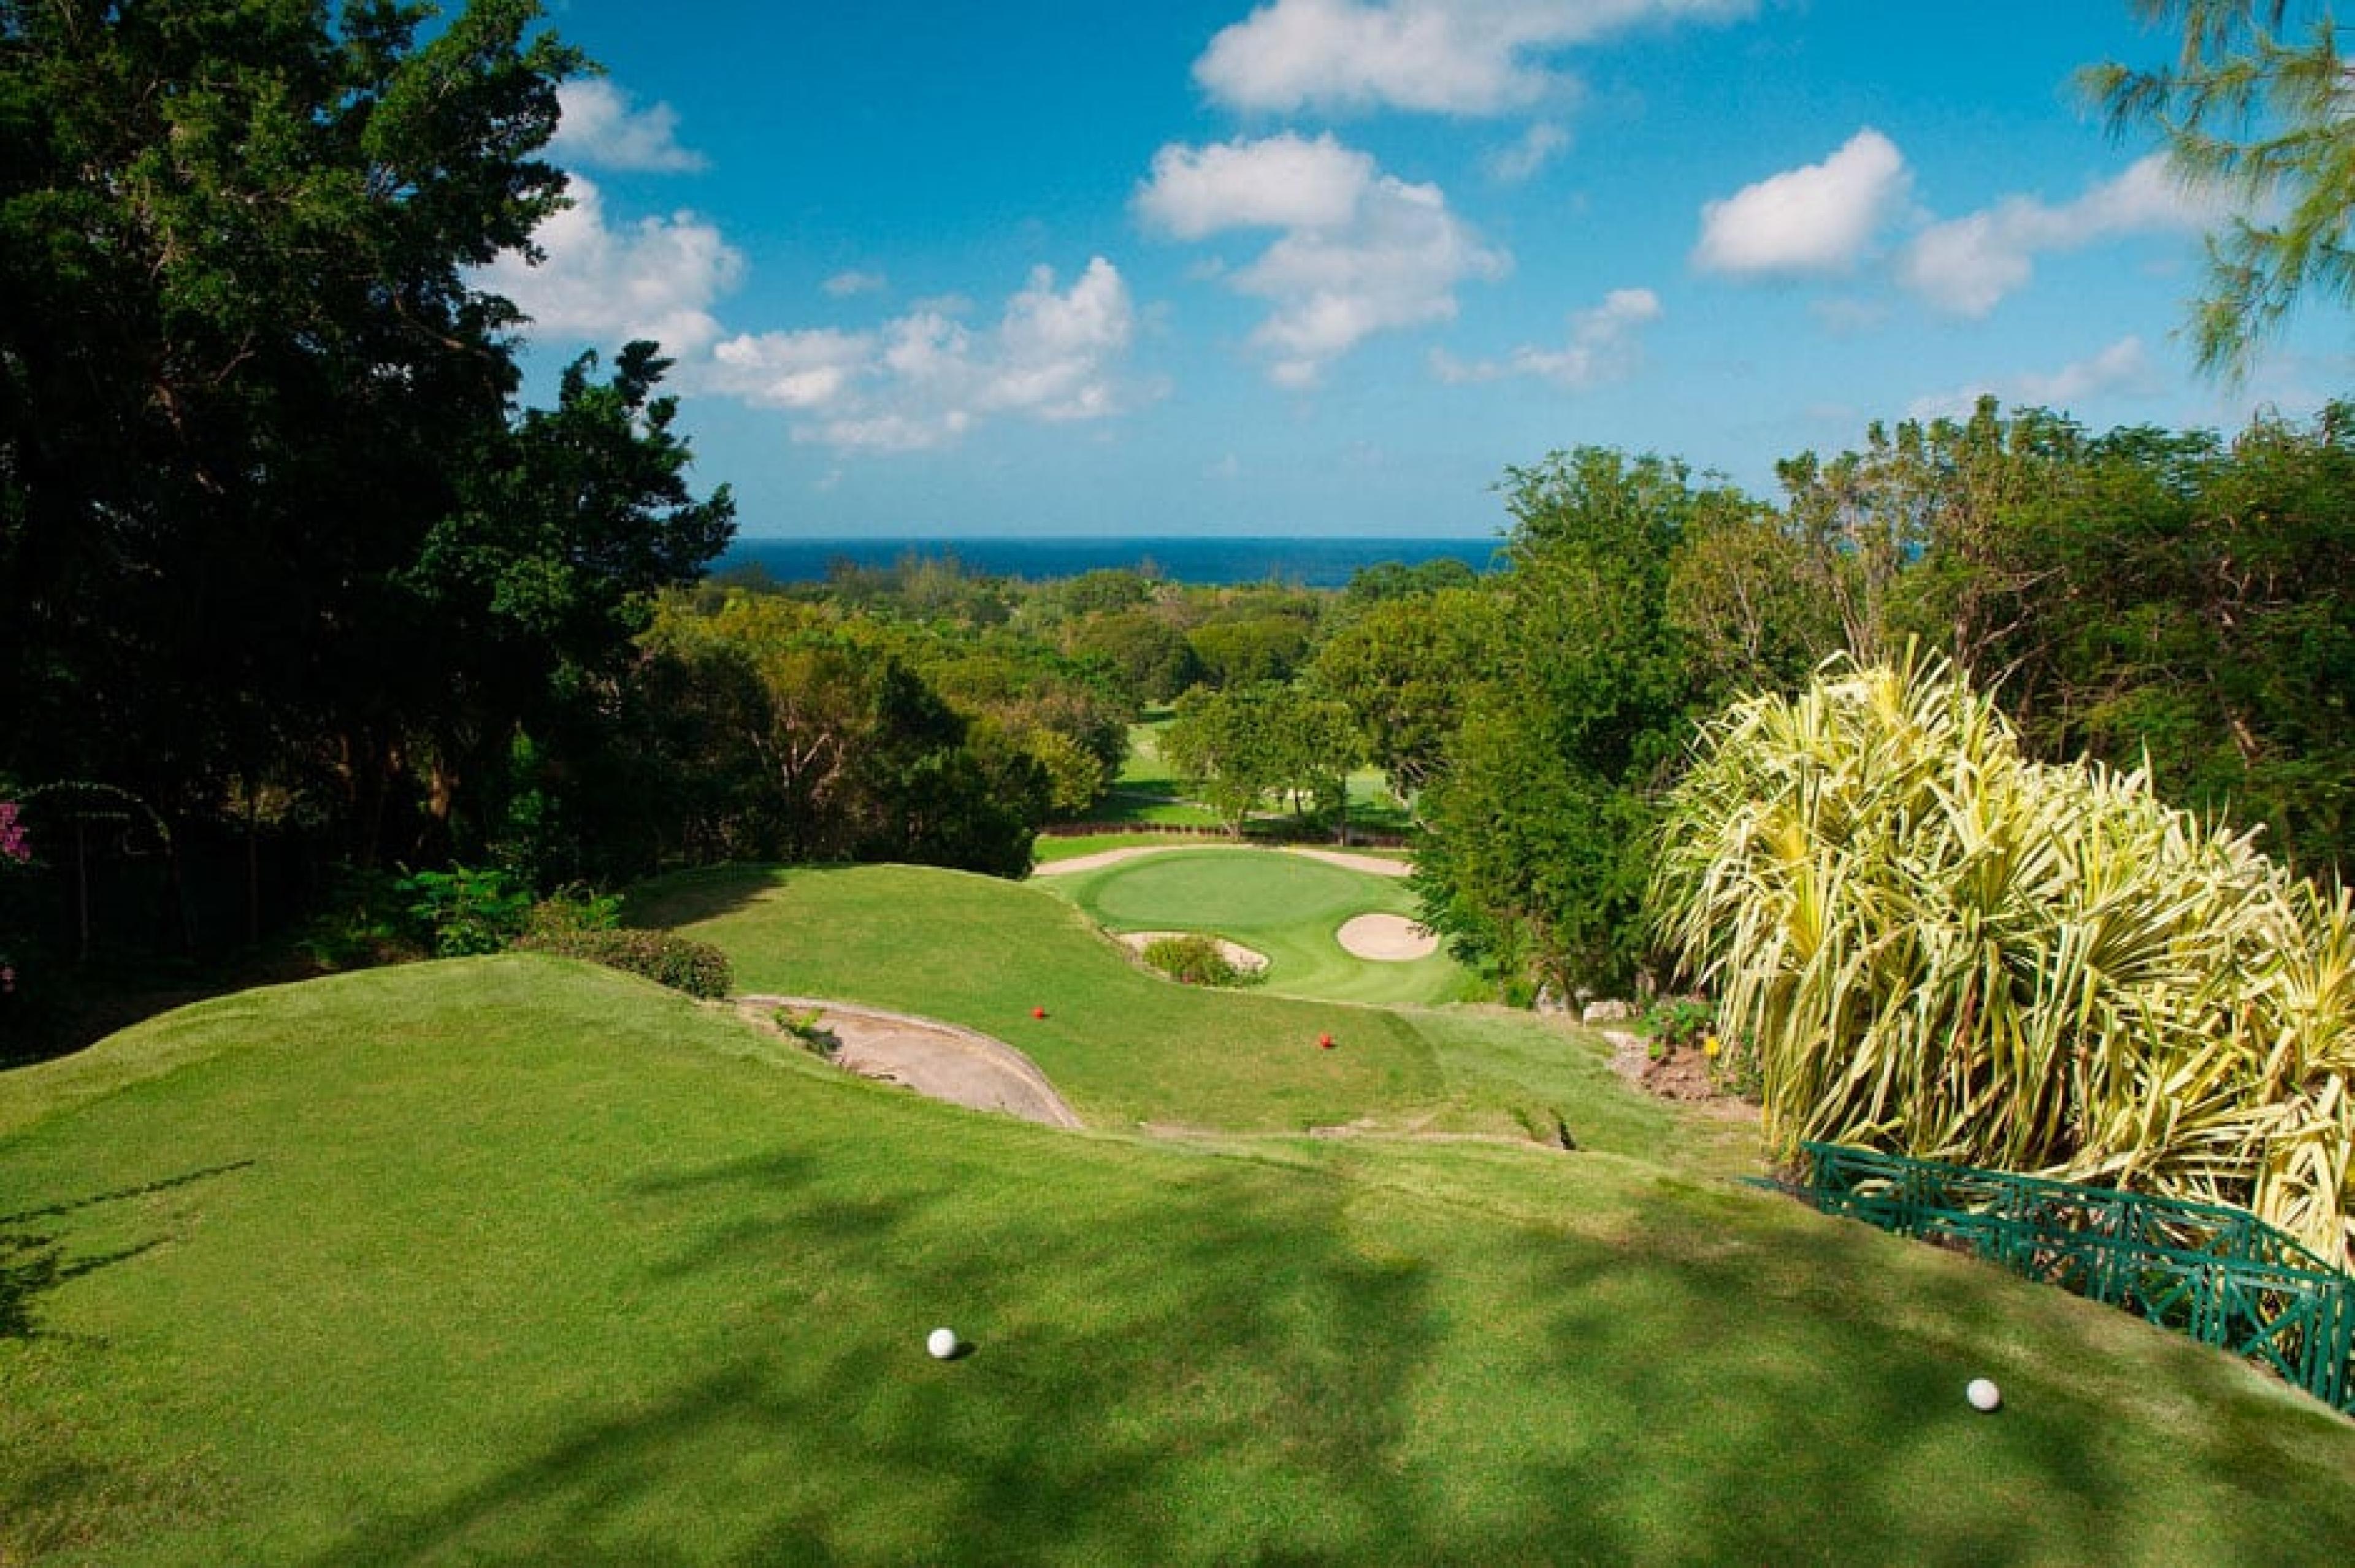 Golf  course at Sandy Lane, Barbados, Caribbean